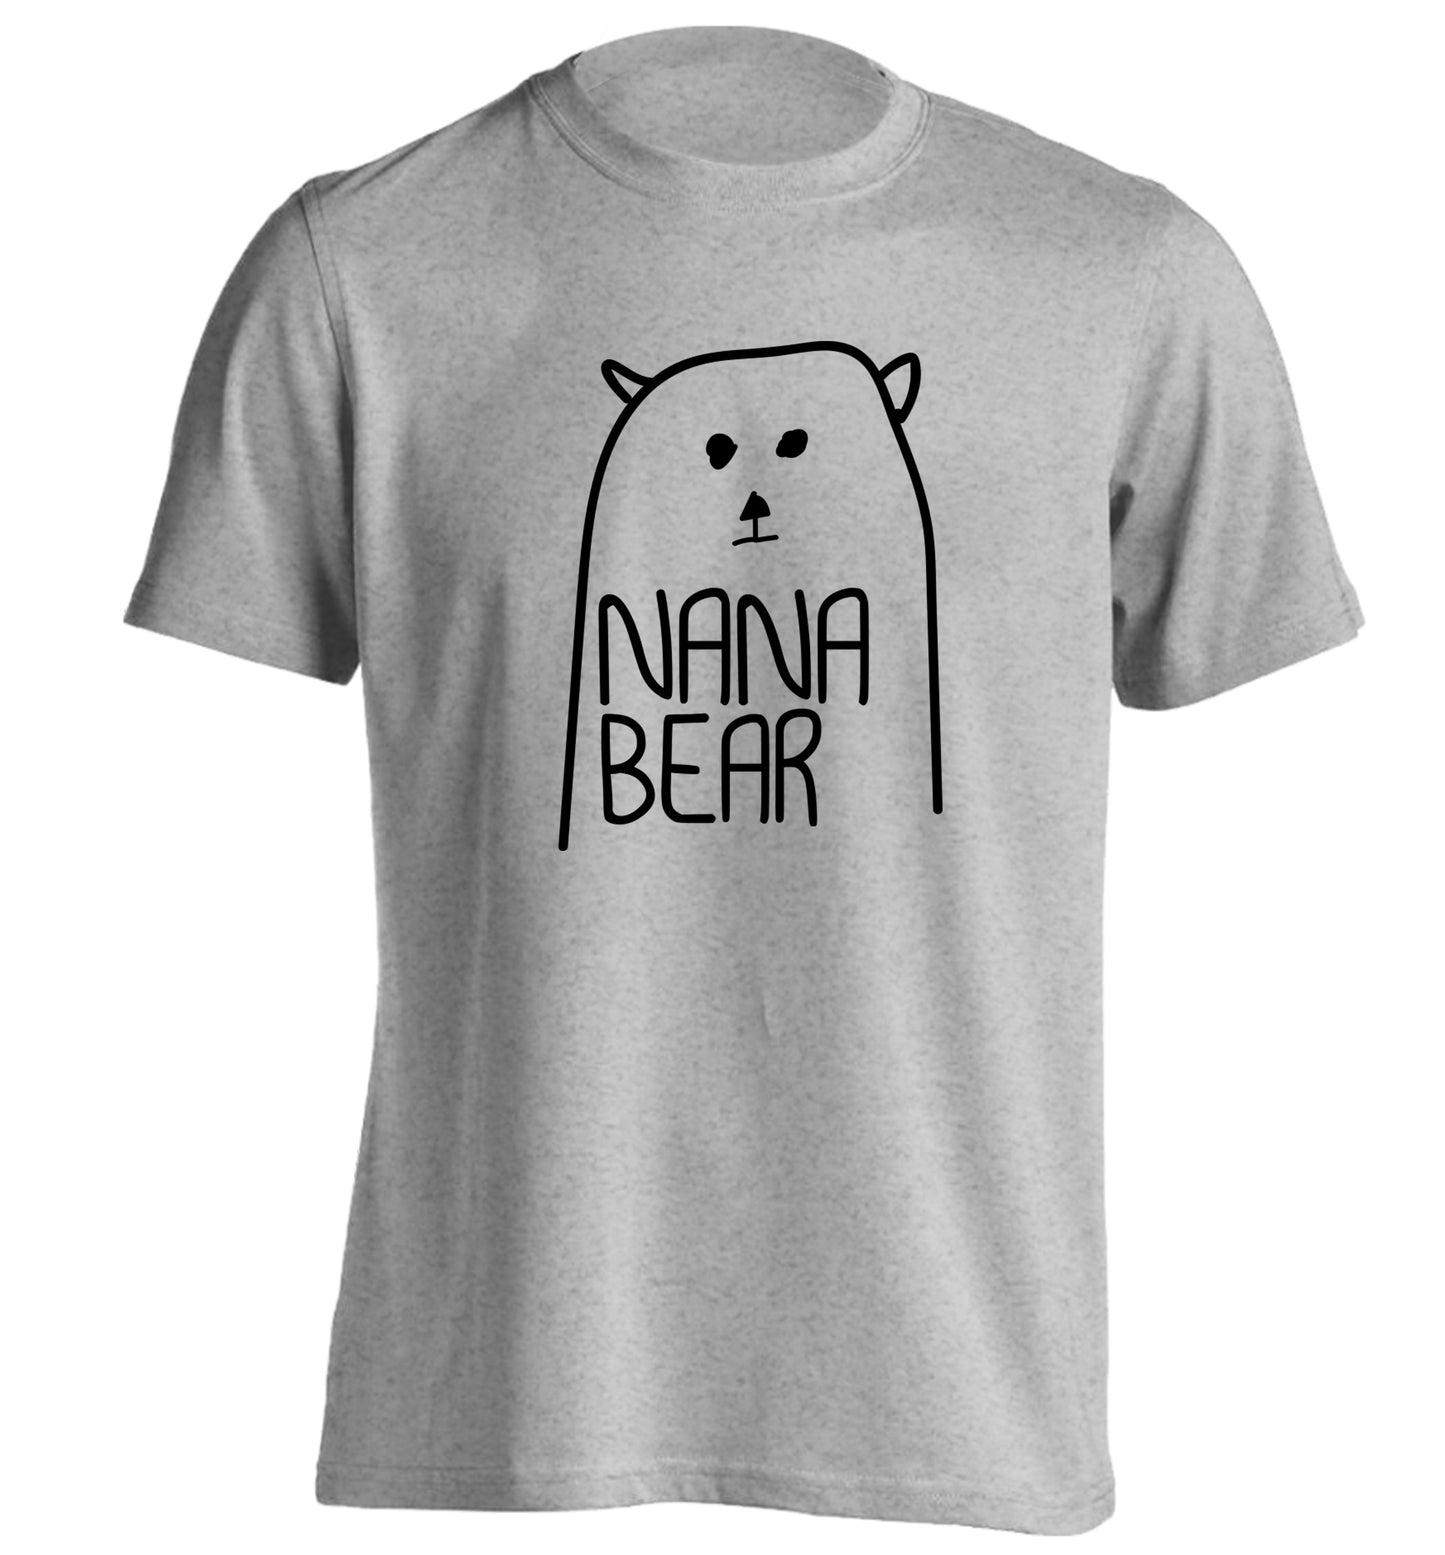 Nana bear adults unisex grey Tshirt 2XL